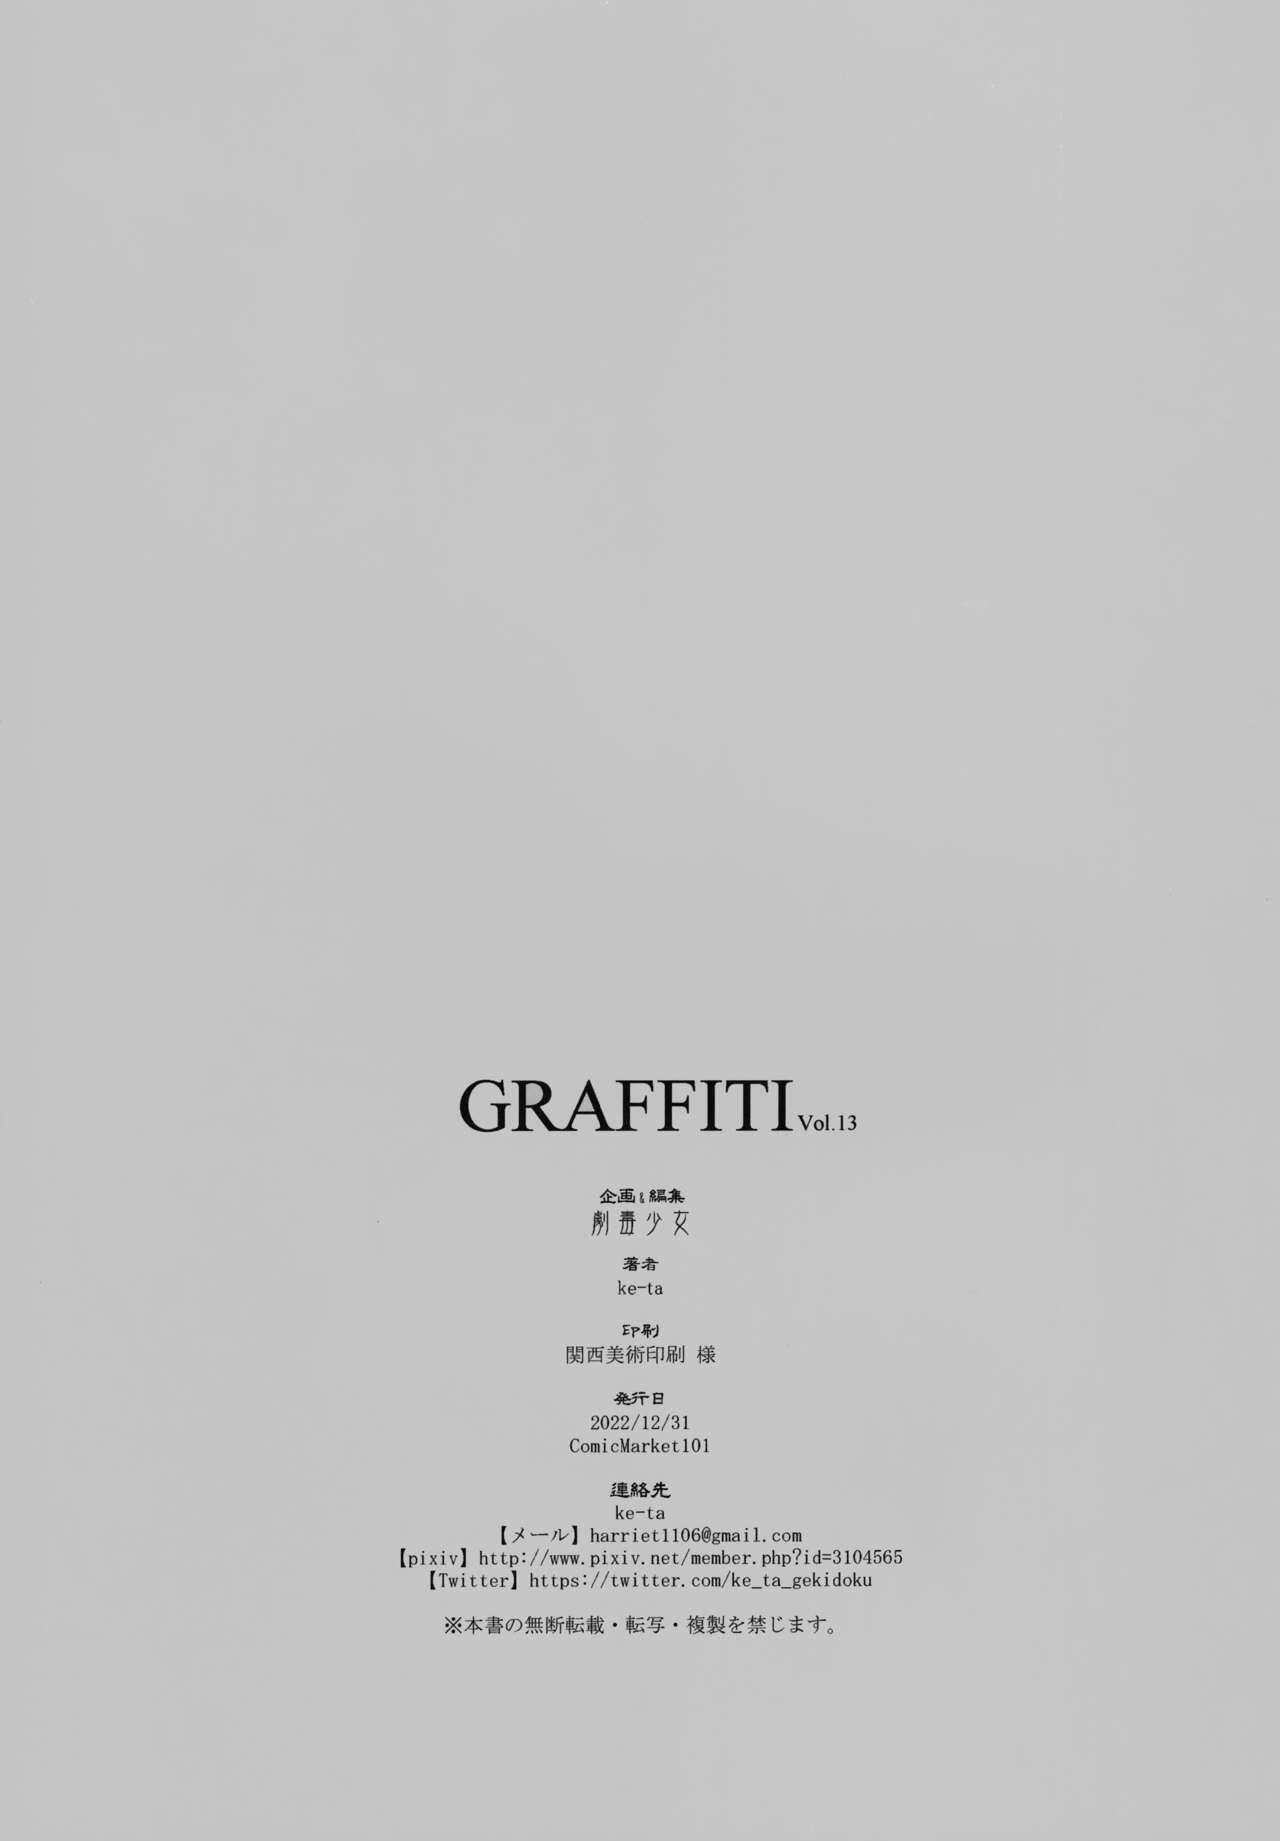 GRAFFITI Vol. 13 10